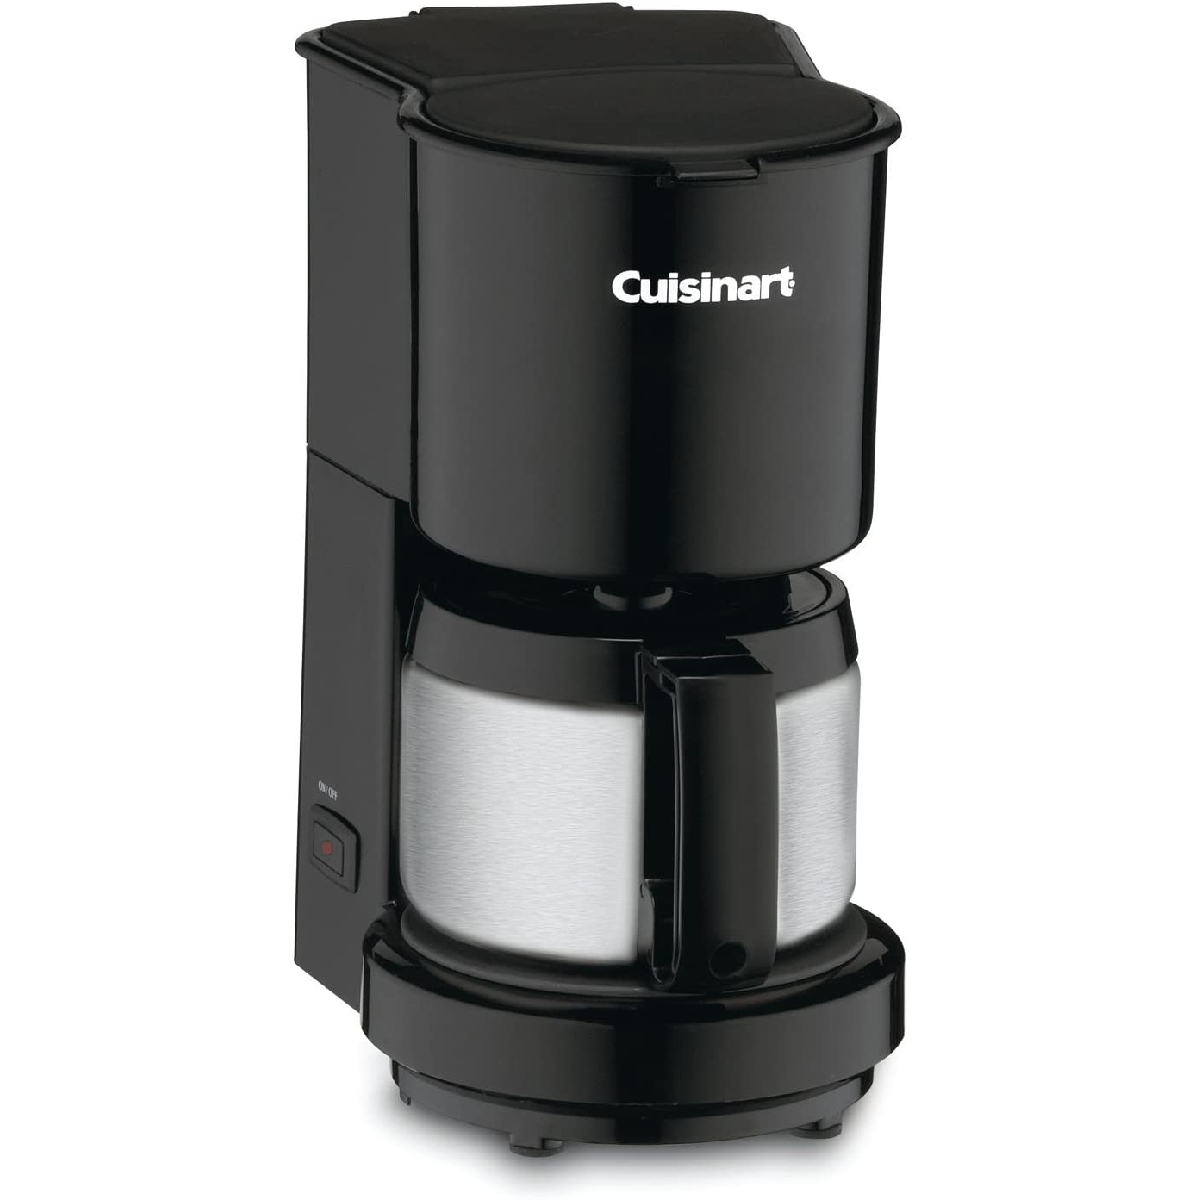 Cuisinart DCC-450BK RV Coffee Maker